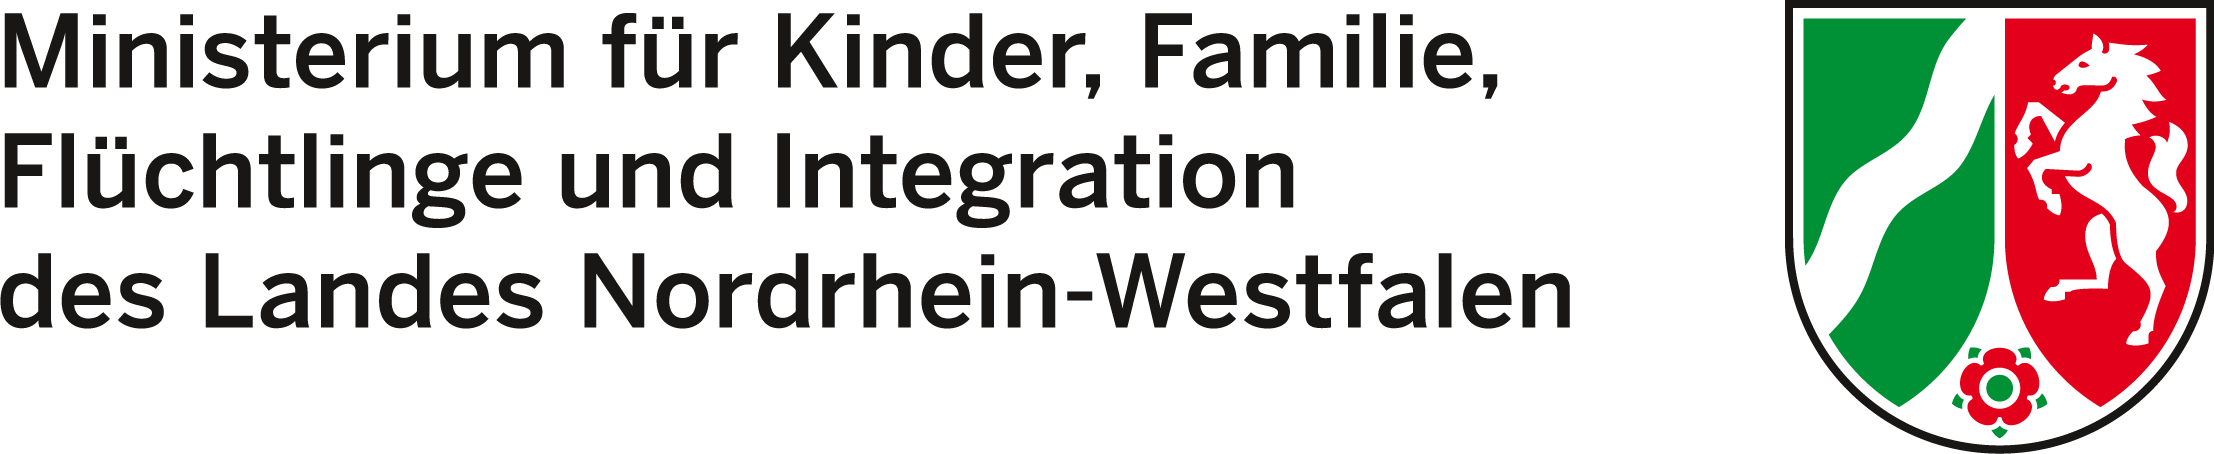 Logo des Ministeriums für Kinder, Familie, Flüchtlinge und Integration des Landes NRW (MKFFI)